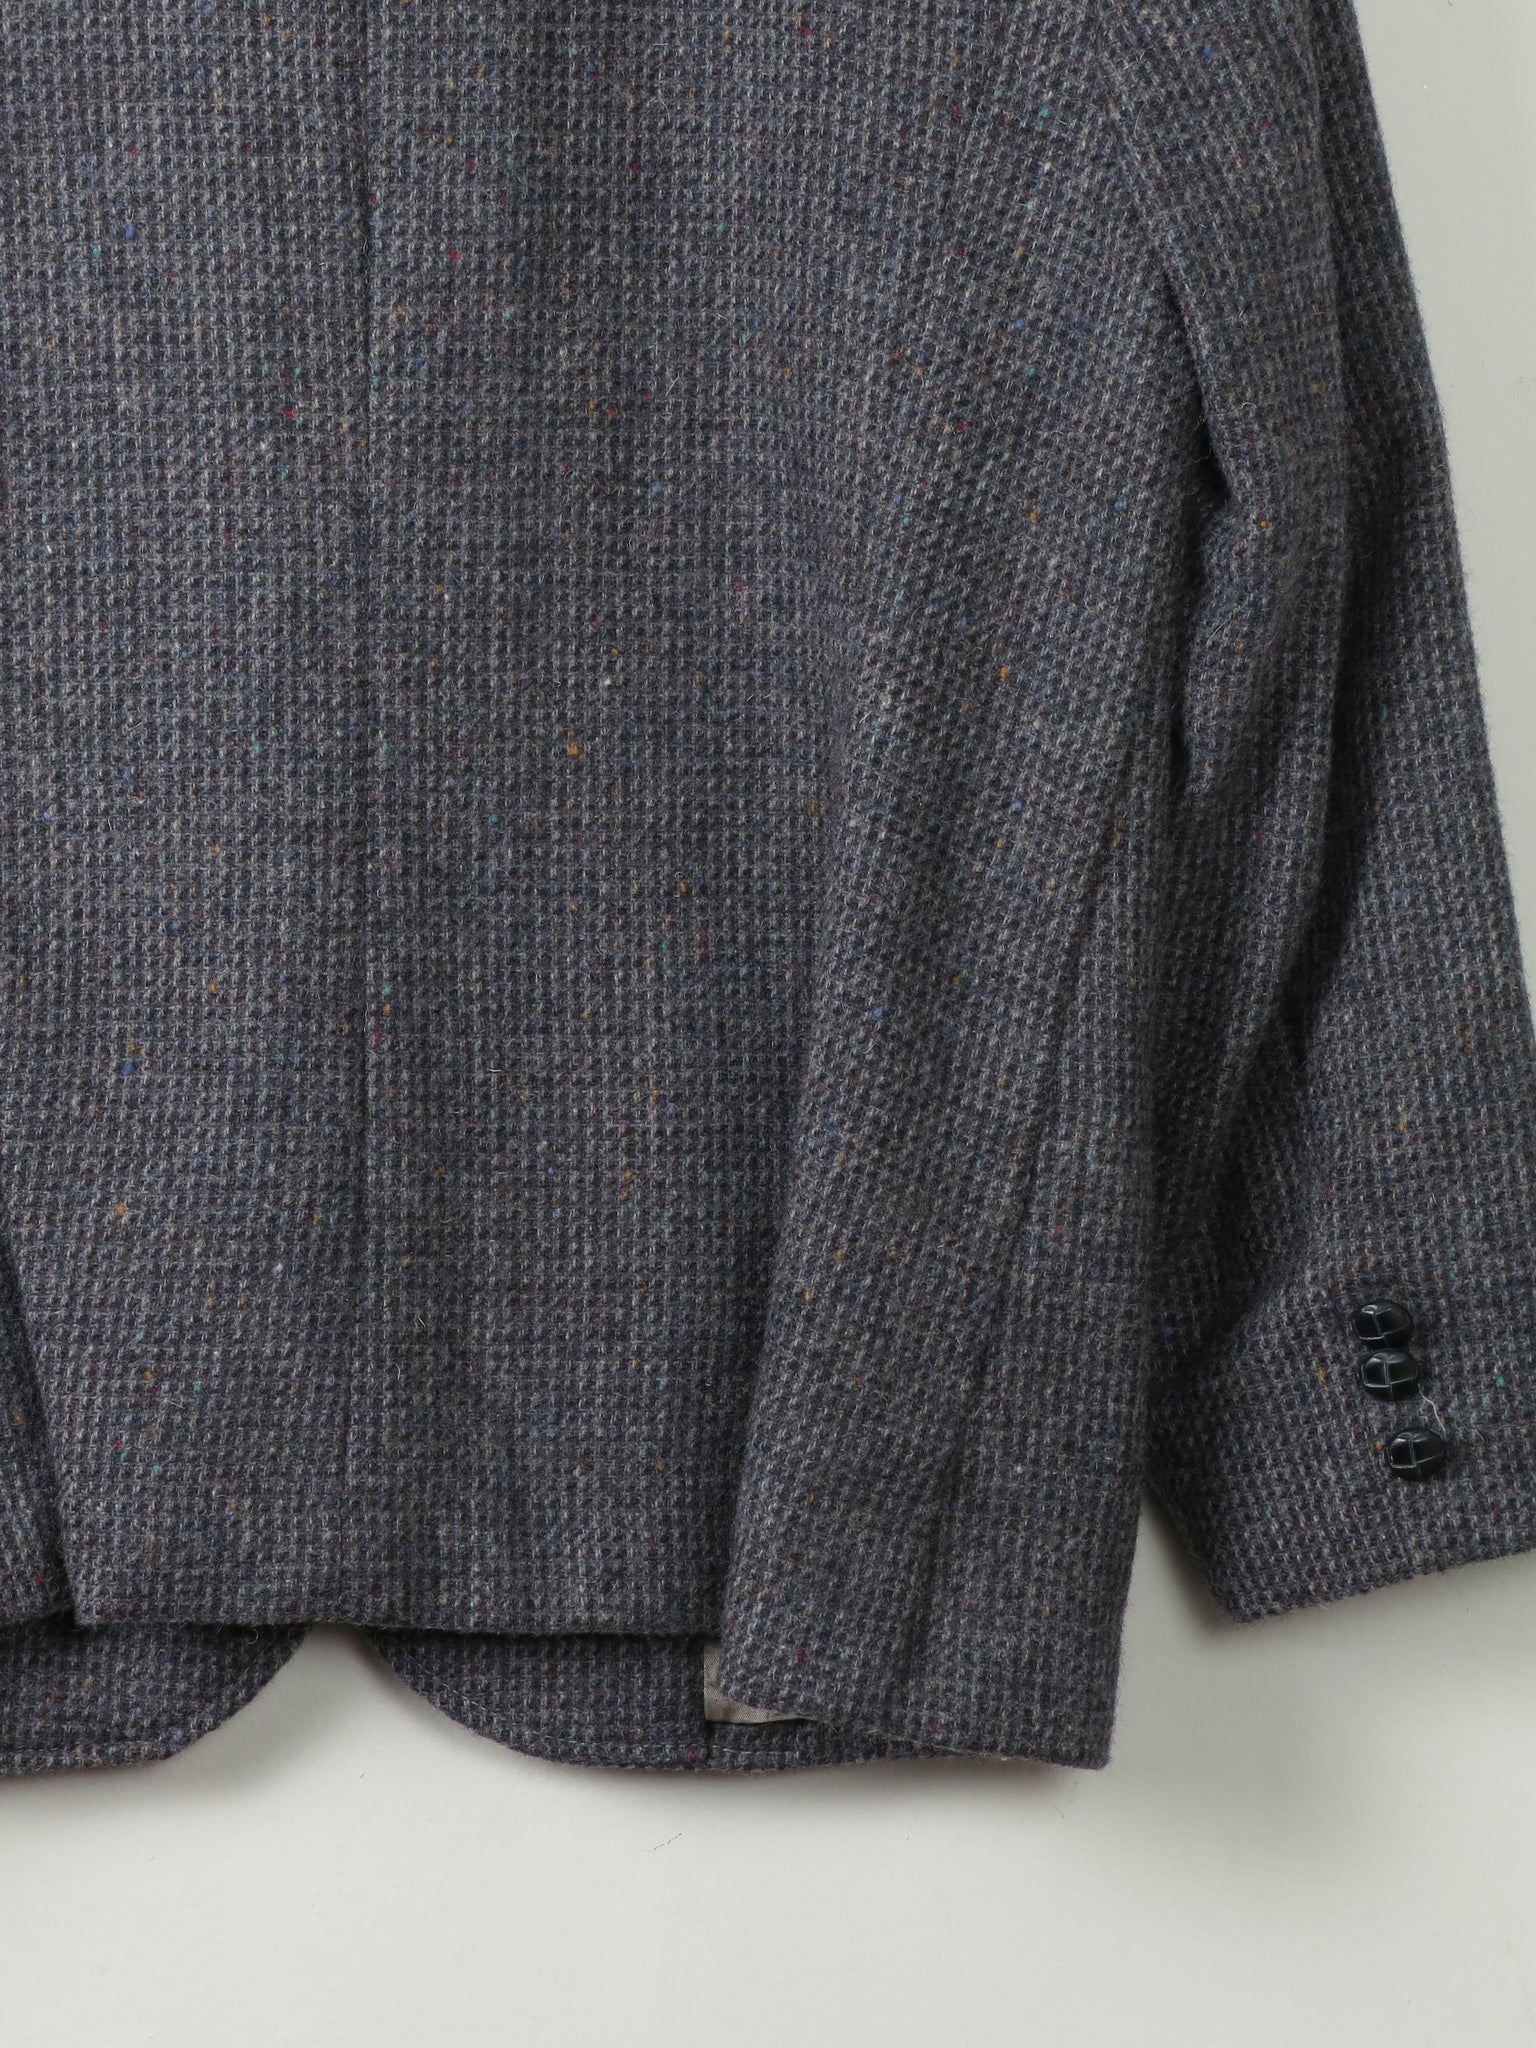 Women's Vintage Blue Tweed Jacket M - The Harlequin